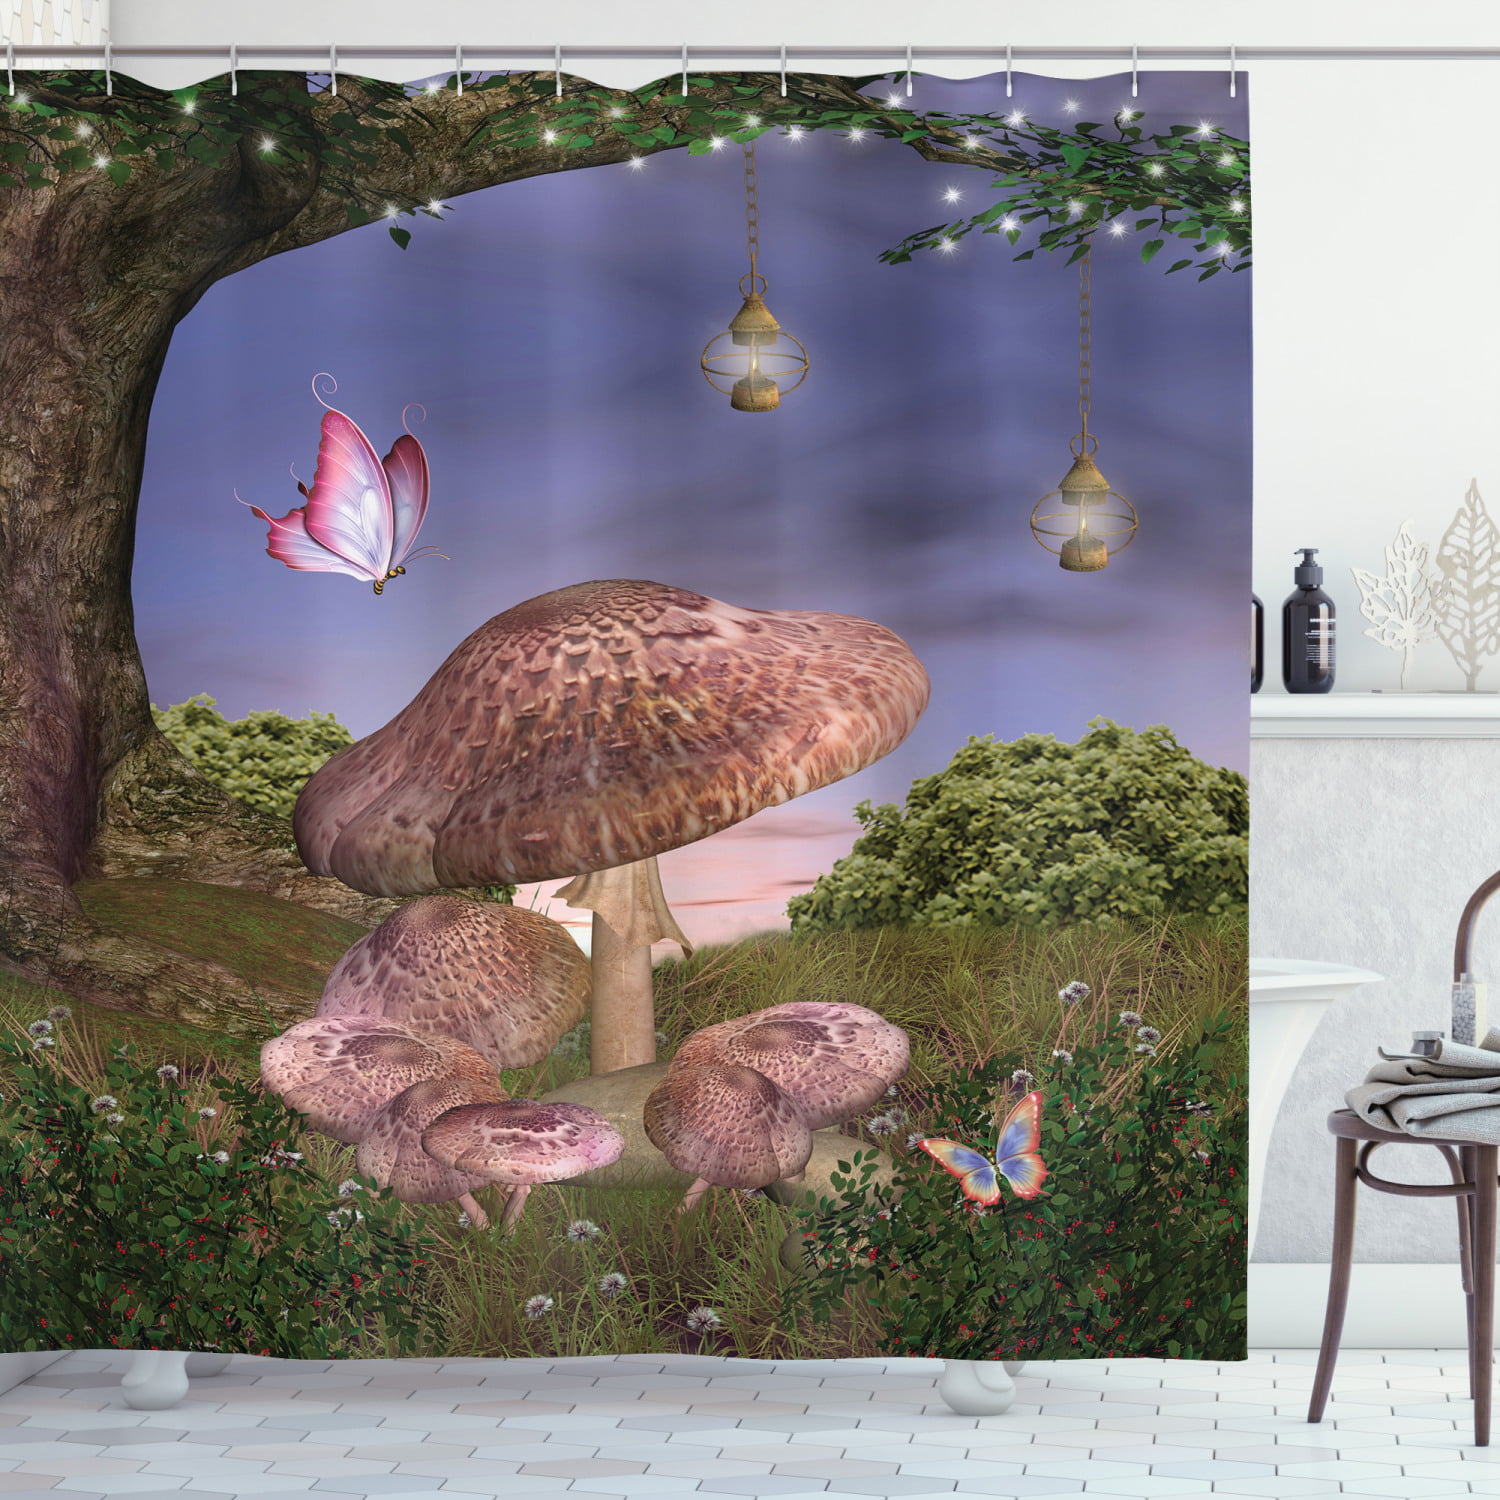 Vibrant Neon Magic Mushroom Graphic Enchanted Forest Theme Shower Curtain Set 